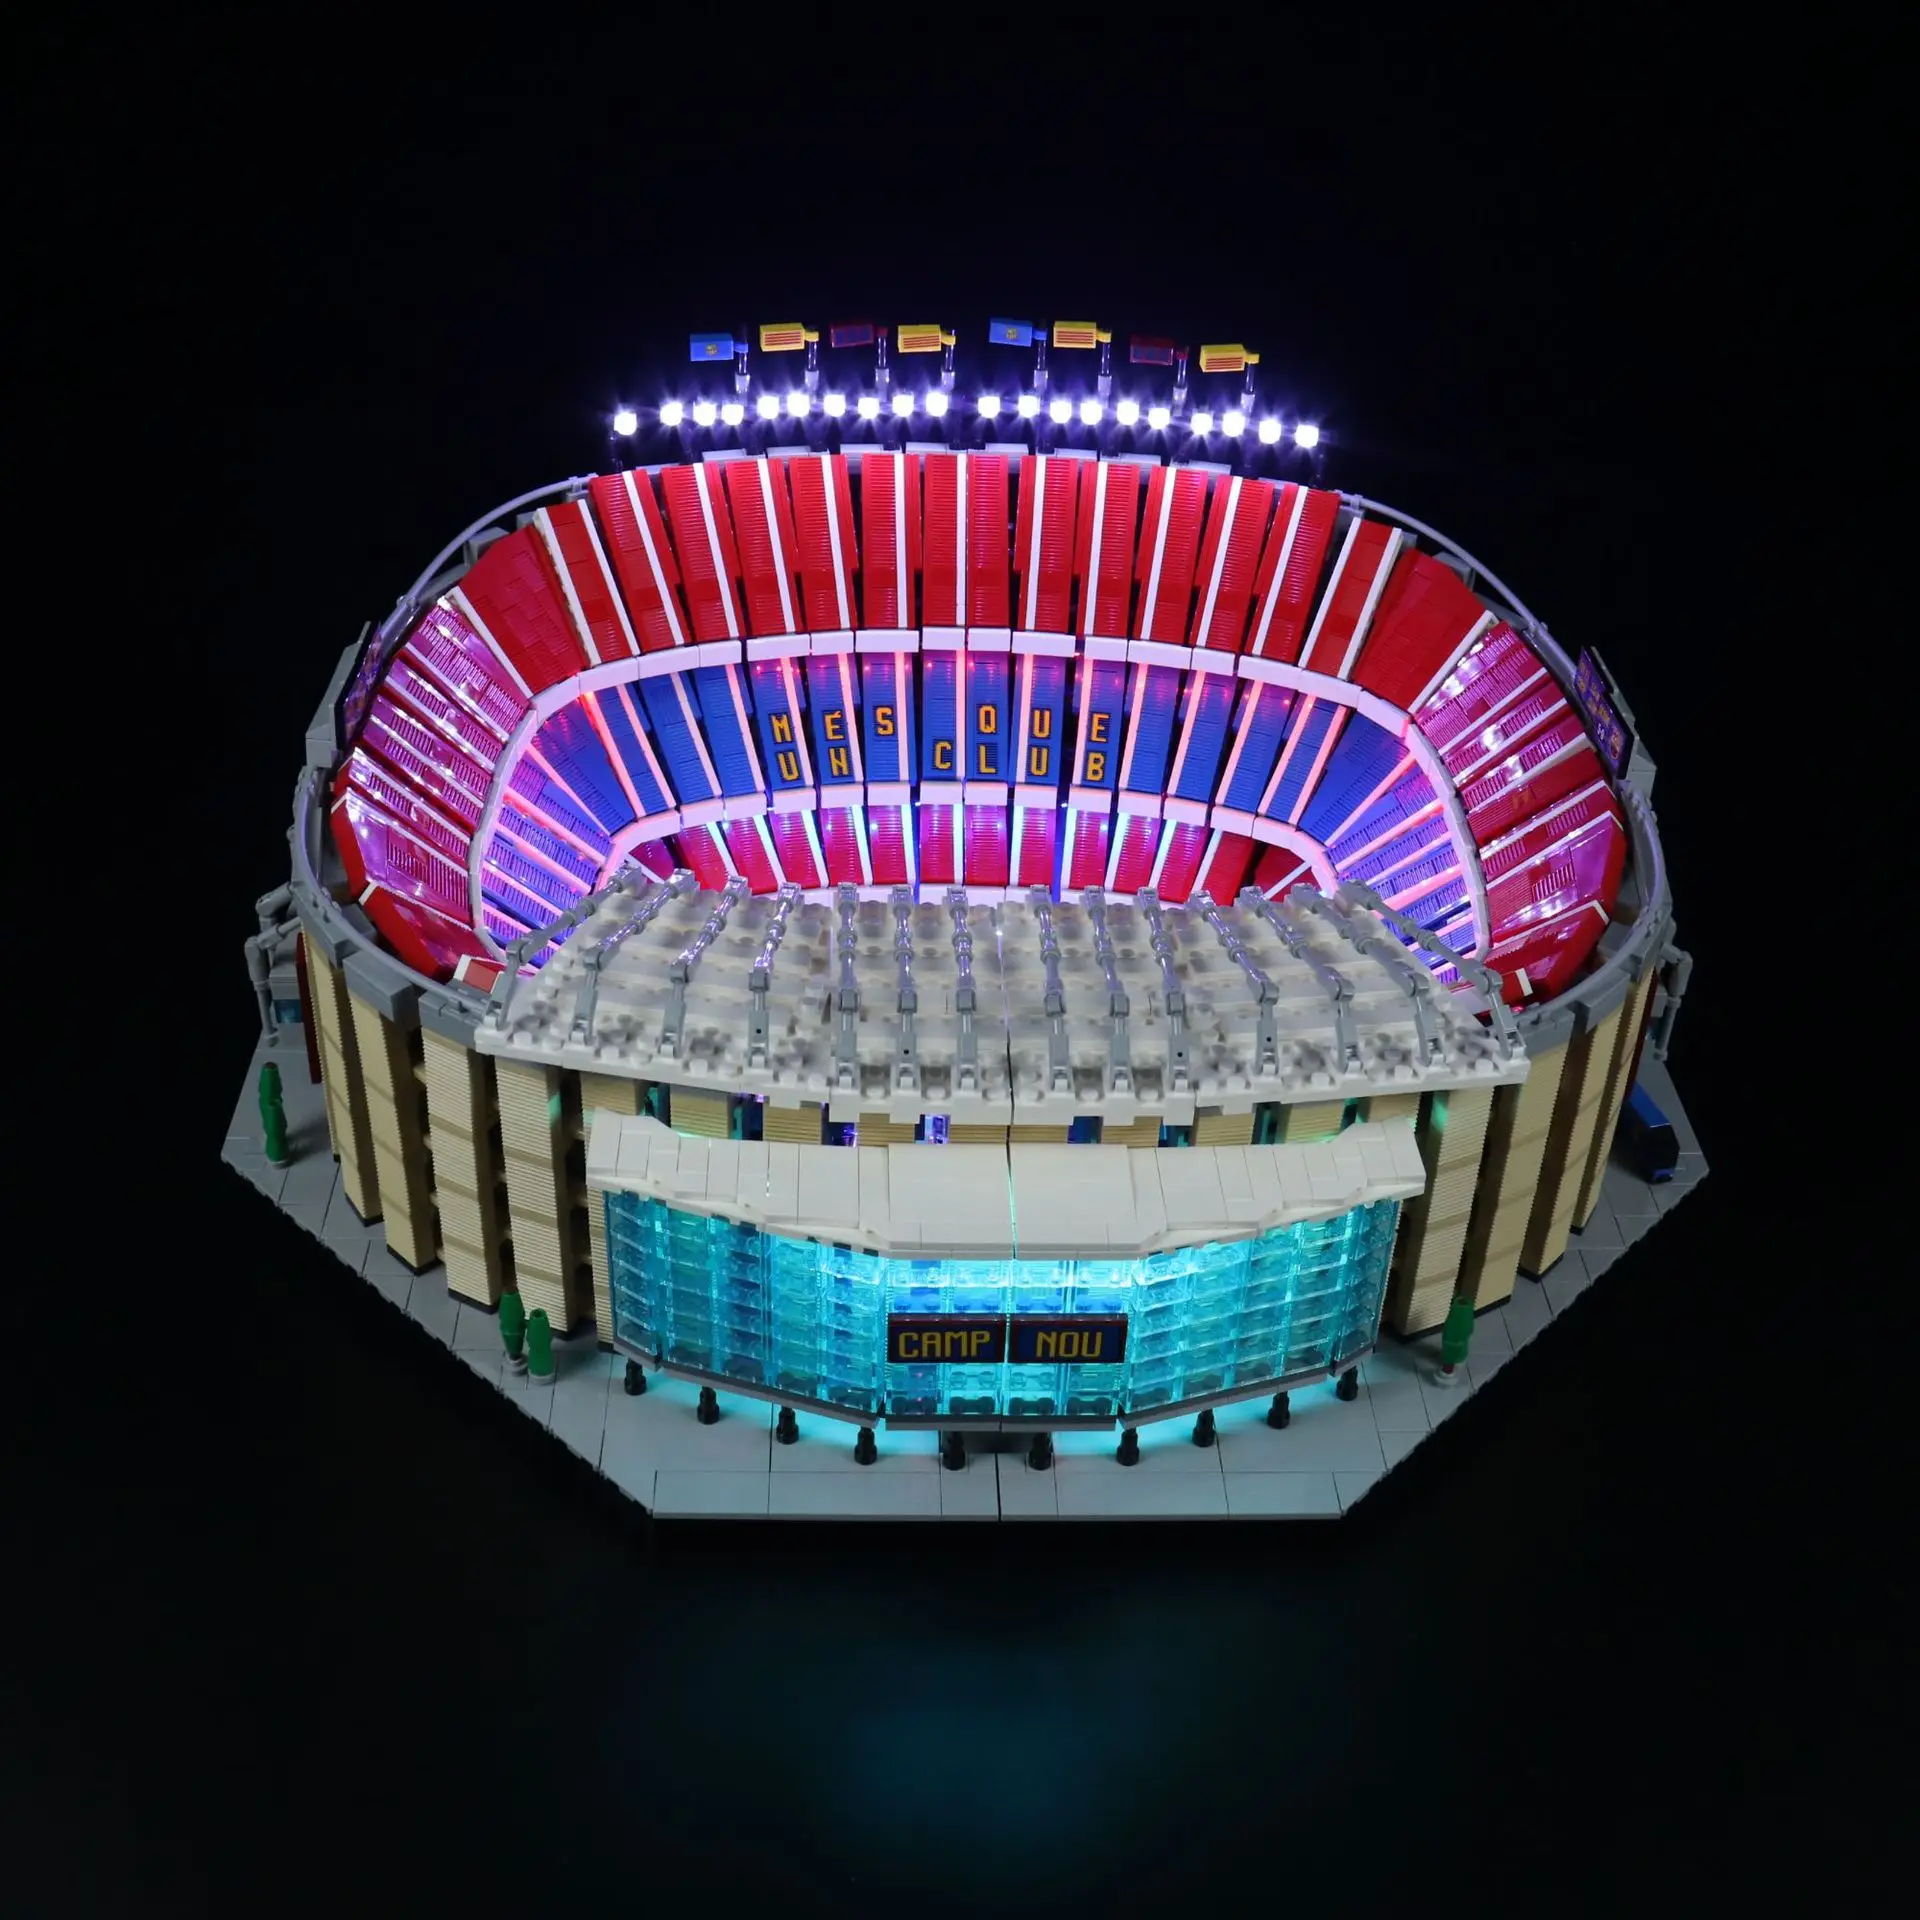 Compatible with 10284 Barcelona Camp Nou football stadium LED lighting (LED lights only, no building blocks model)